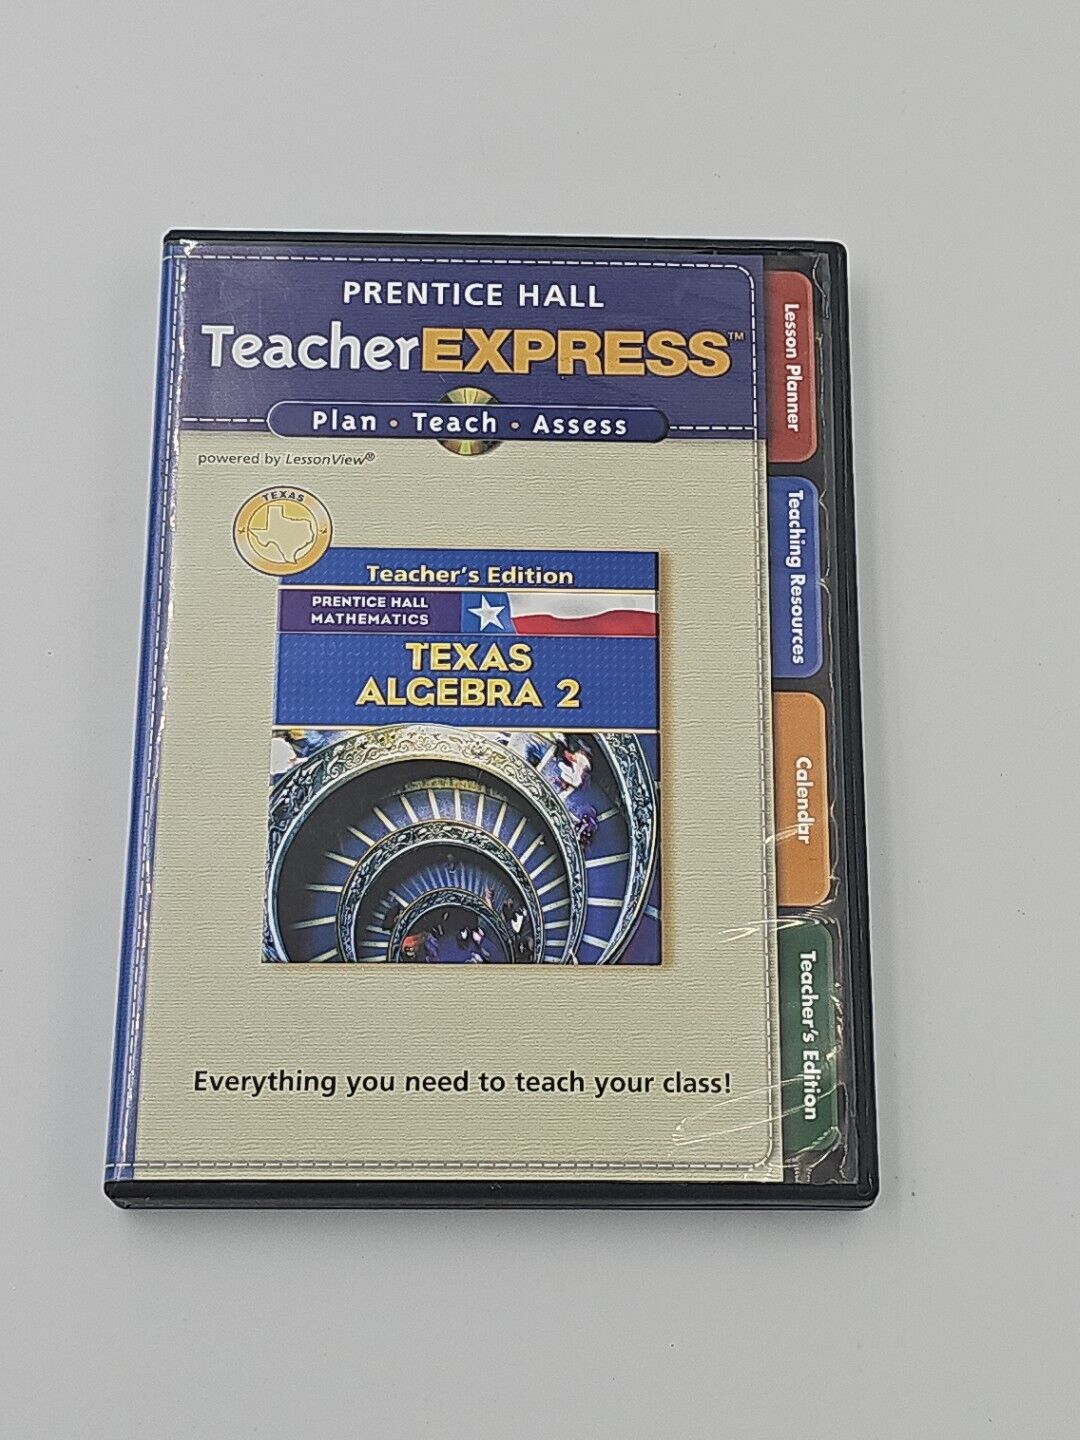 NEW Prentice Hall TeacherEXPRESS Teacher Express Texas Algebra 2 CD-ROM Set New